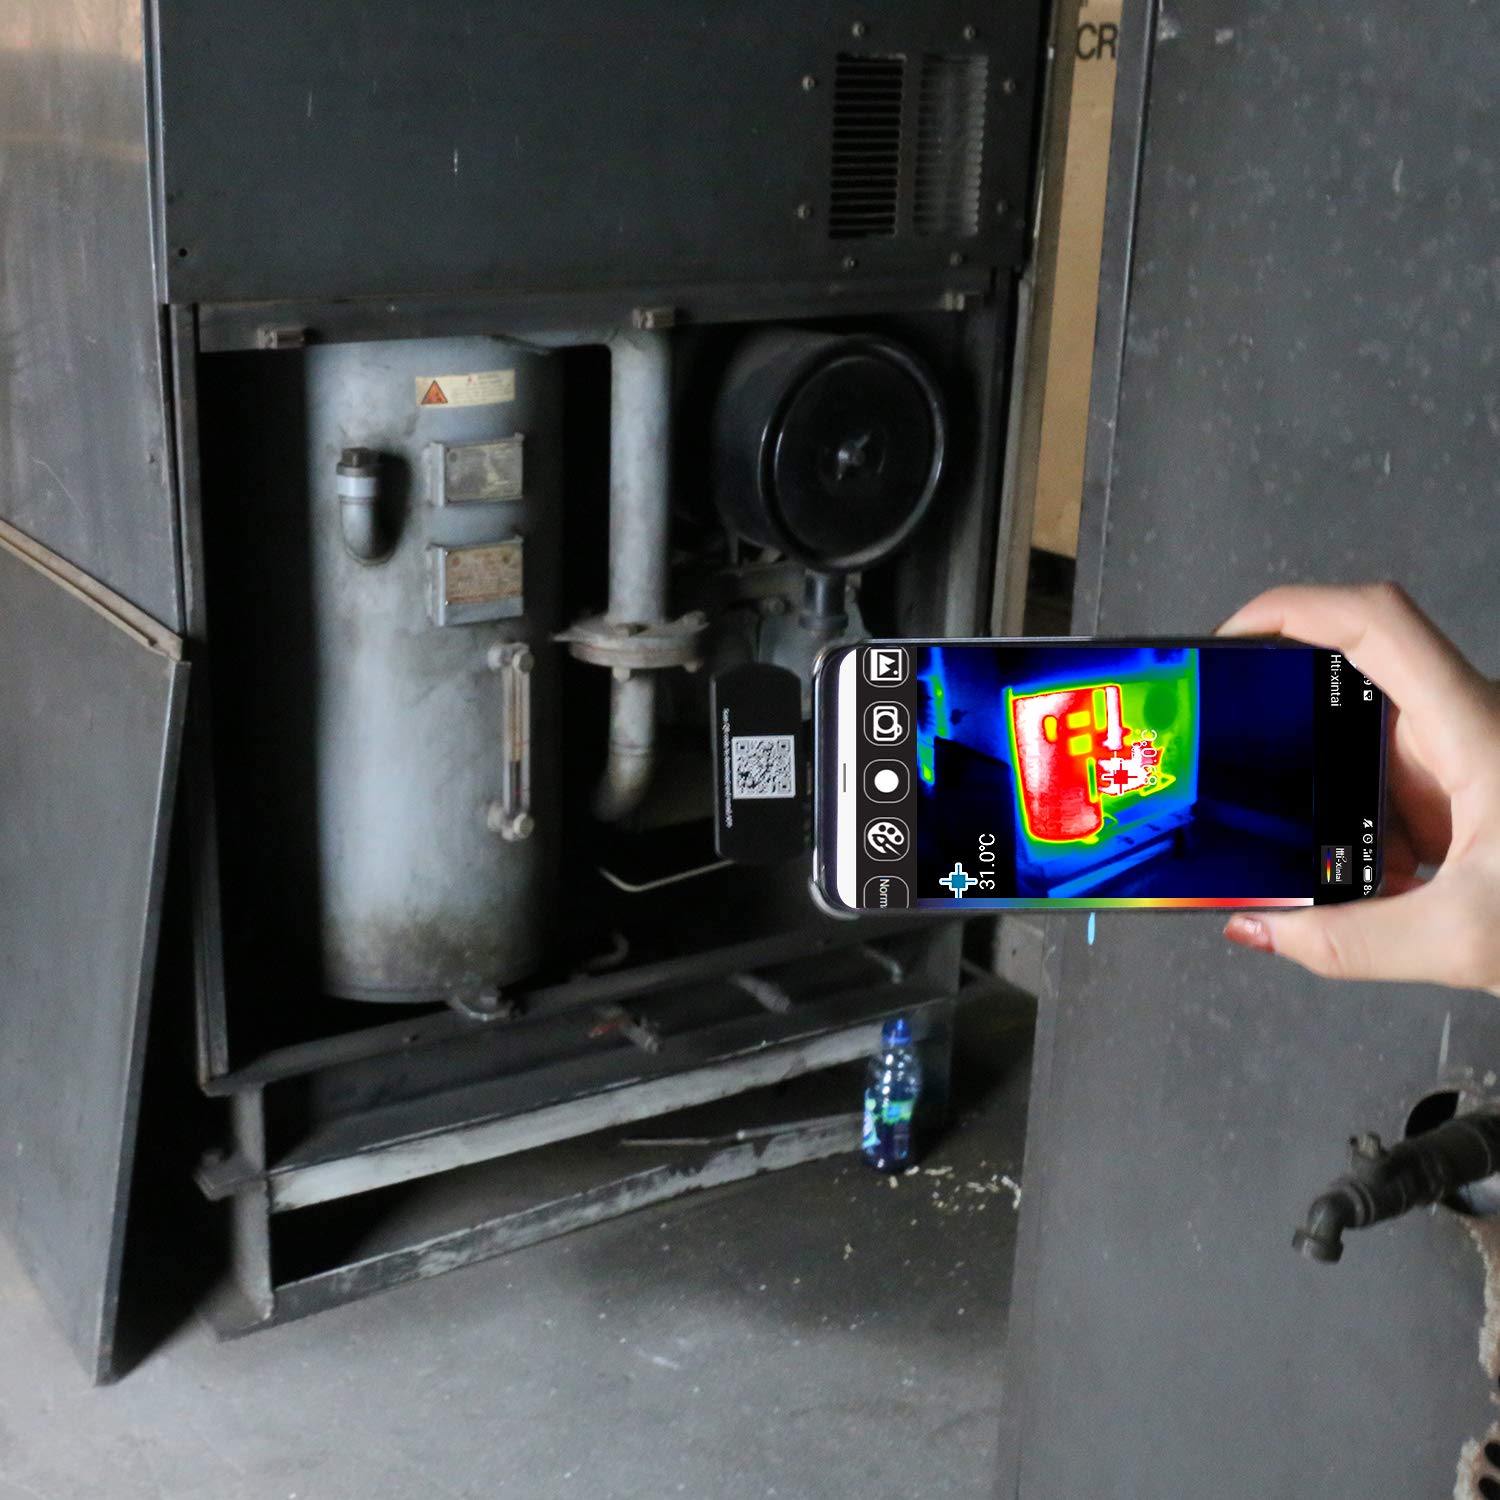 Hti-Xintai - Cámara térmica de alta resolución para smartphones Android, USB tipo C, color negro